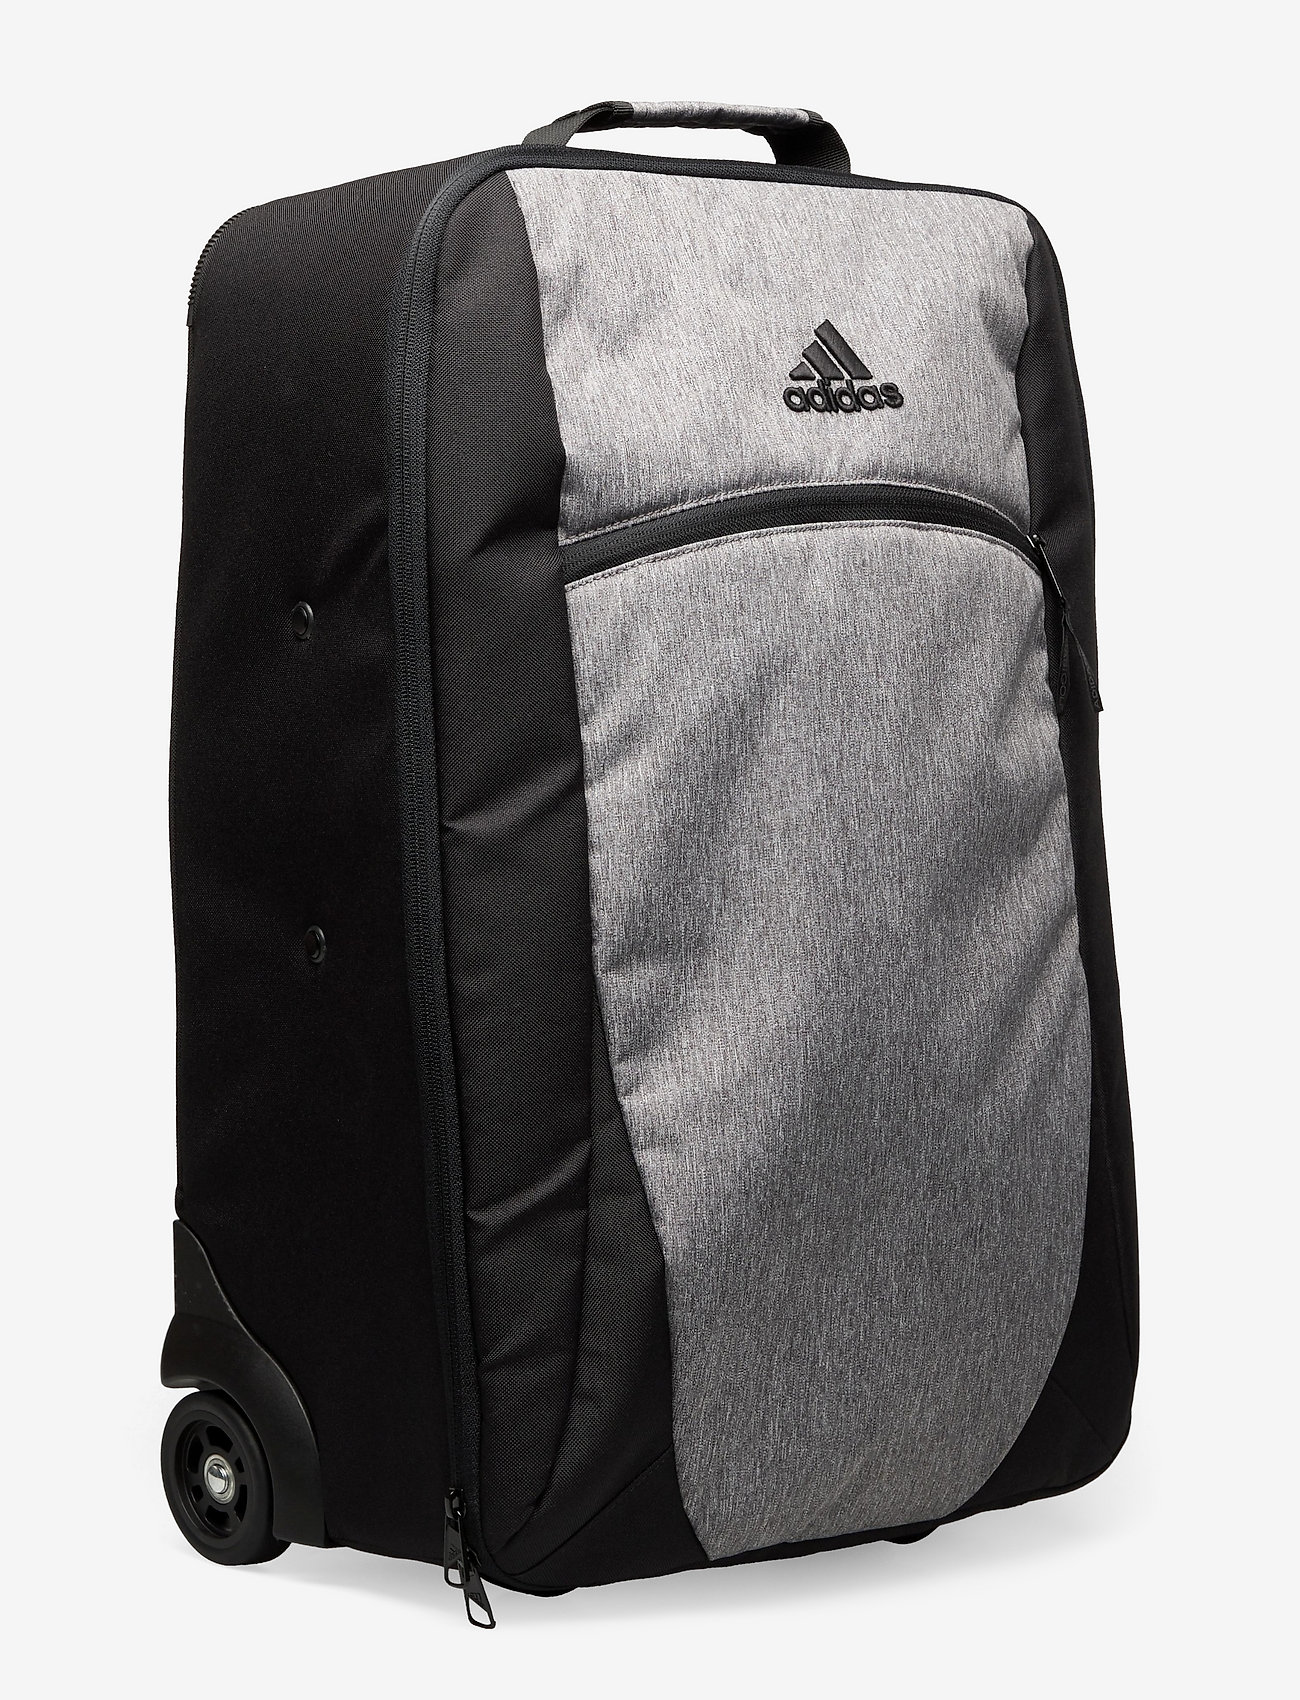 Adidas Golf Gray travel backpack NWT | Adidas golf, Travel backpack, Adidas